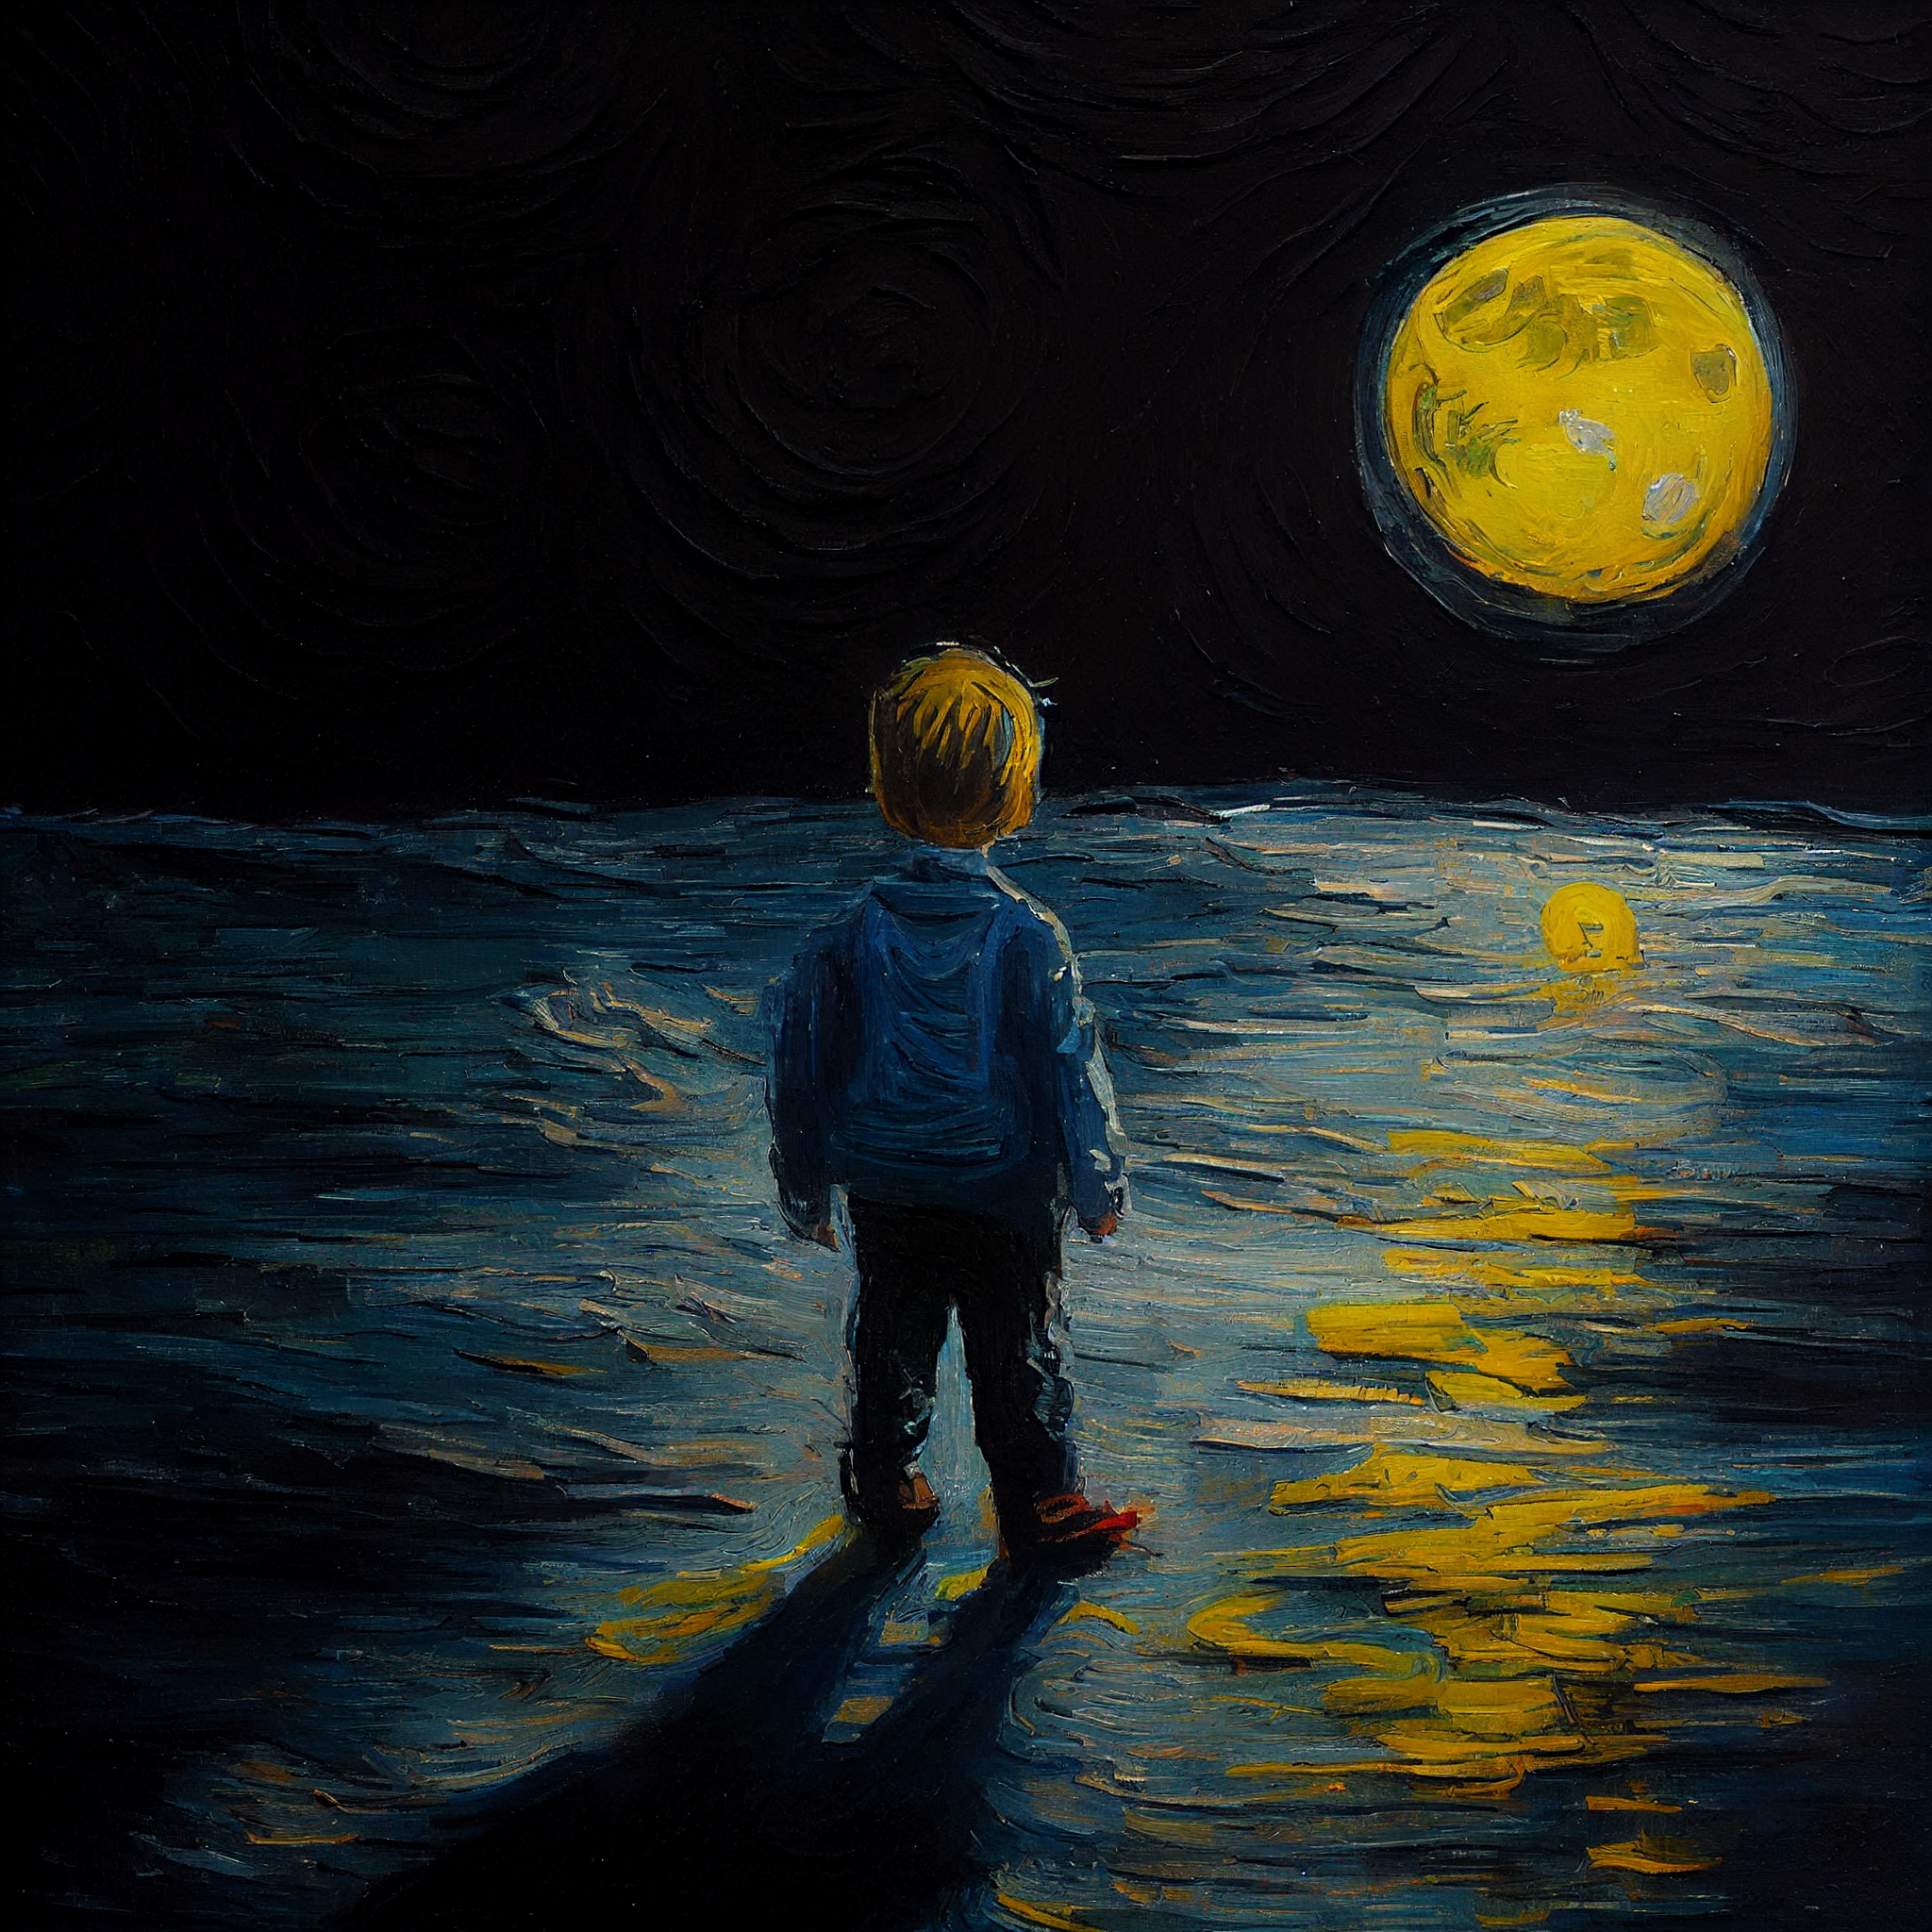 Nighttime Wonder: Small Boy Watching the Moon